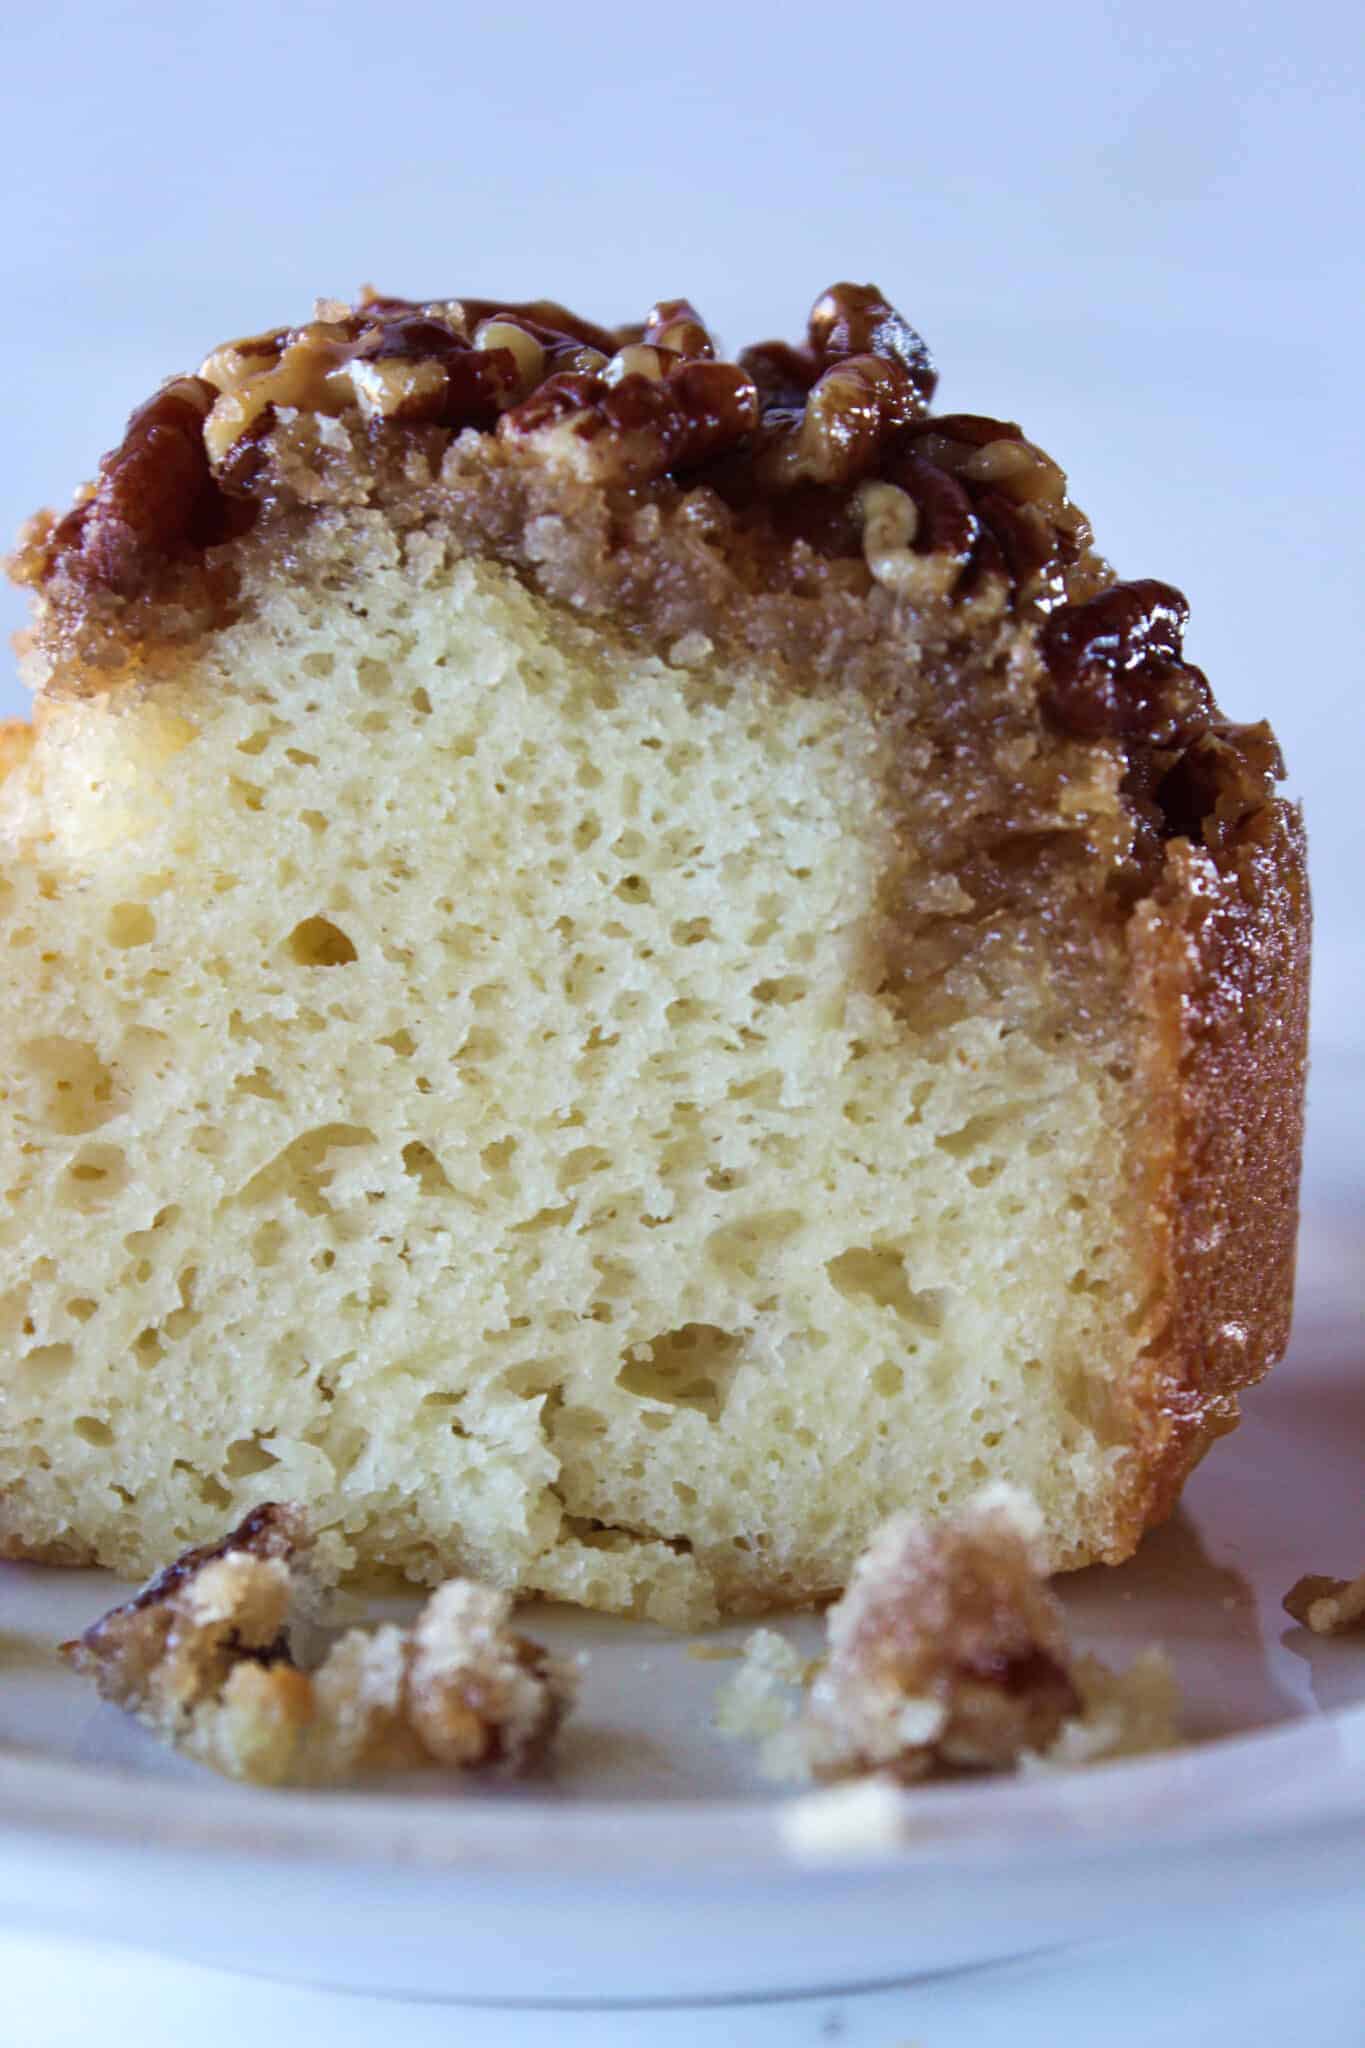 Pecan Upside Down Bundt Cake Recipe featured by top US dessert blog, Practically Homemade